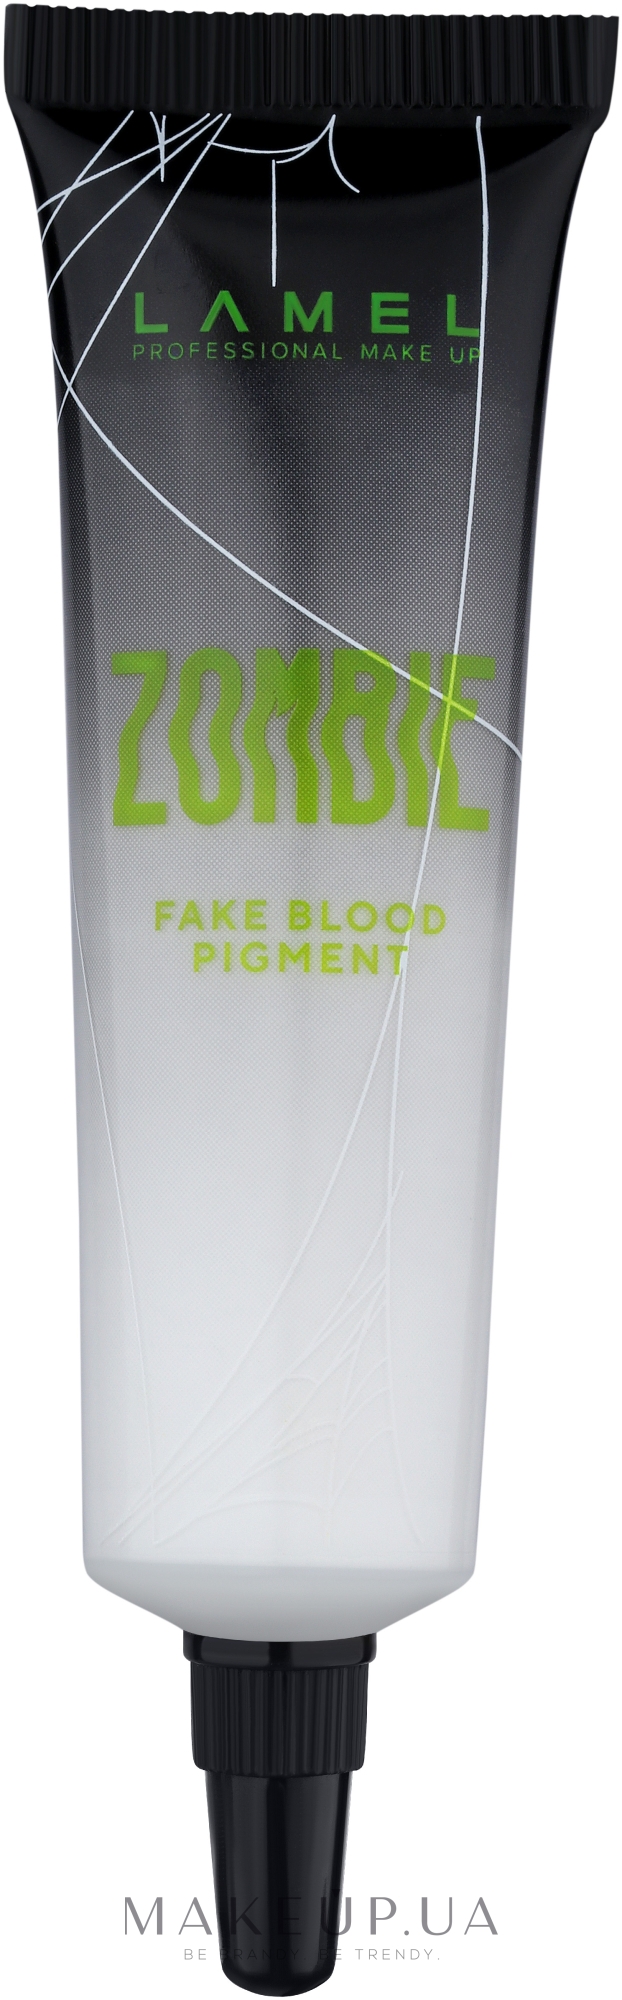 LAMEL Make Up Zombie Fake Blood Pigment